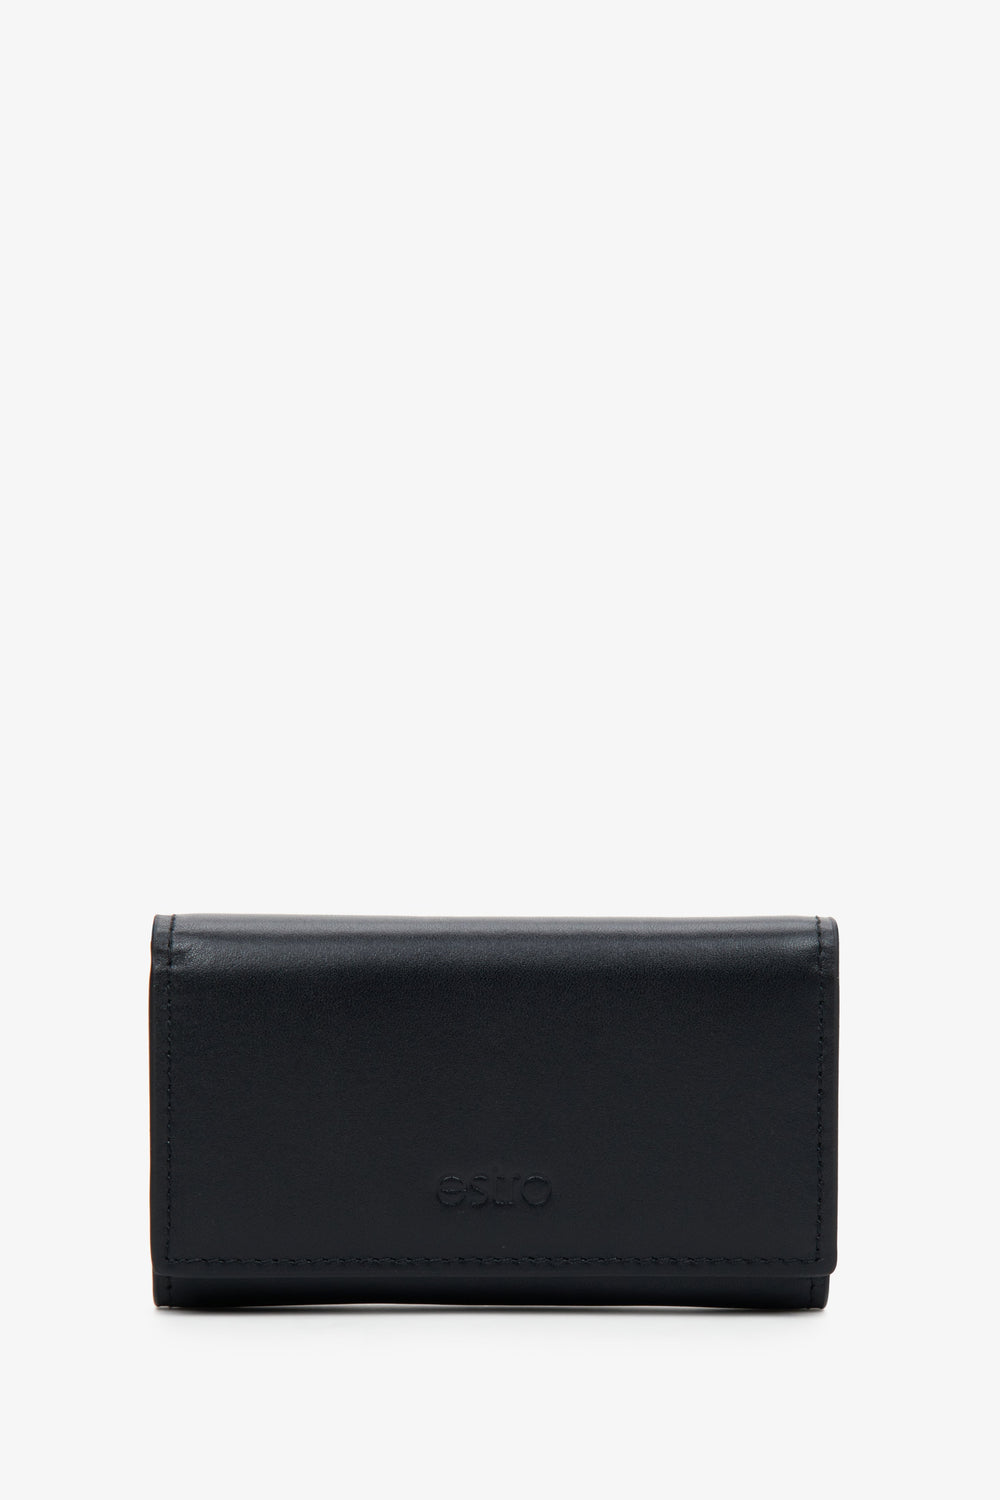 Black Key Case made of Genuine Leather Estro ER00113612.